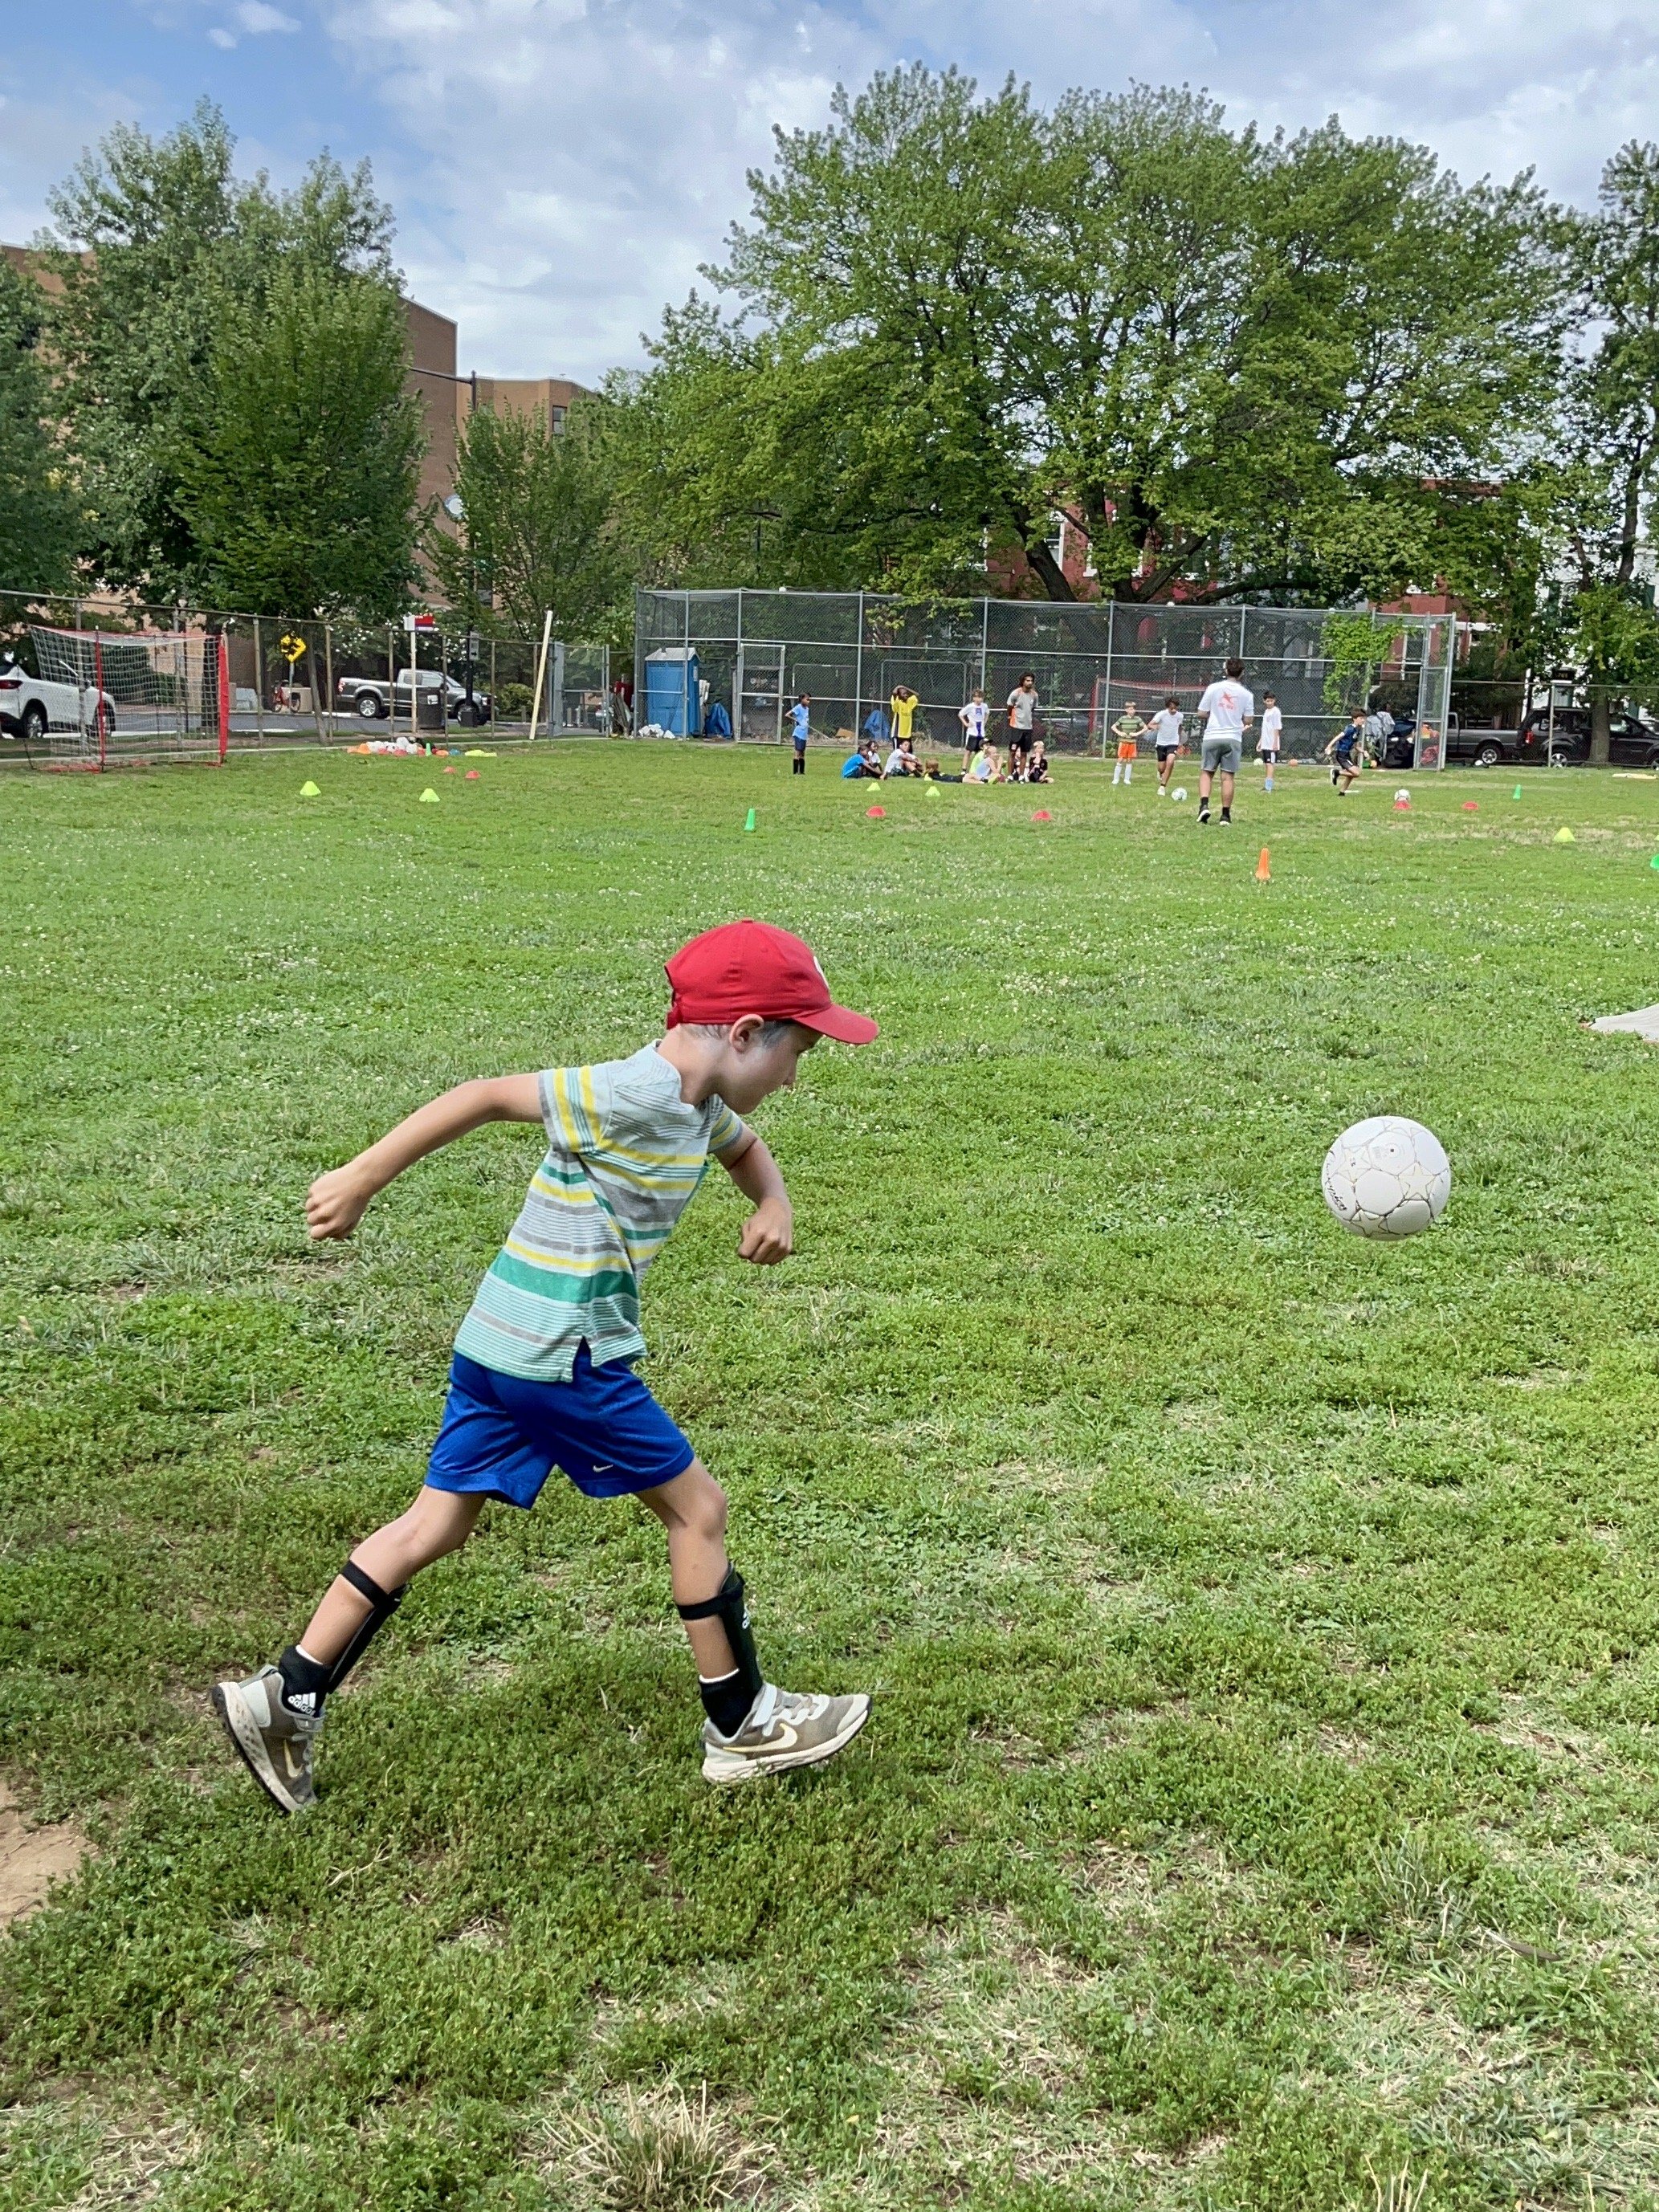 Dc-way-soccer-club-for-kids-in-washington-dc-summer-camp-at-tyler-elementary-school- 8485.JPG